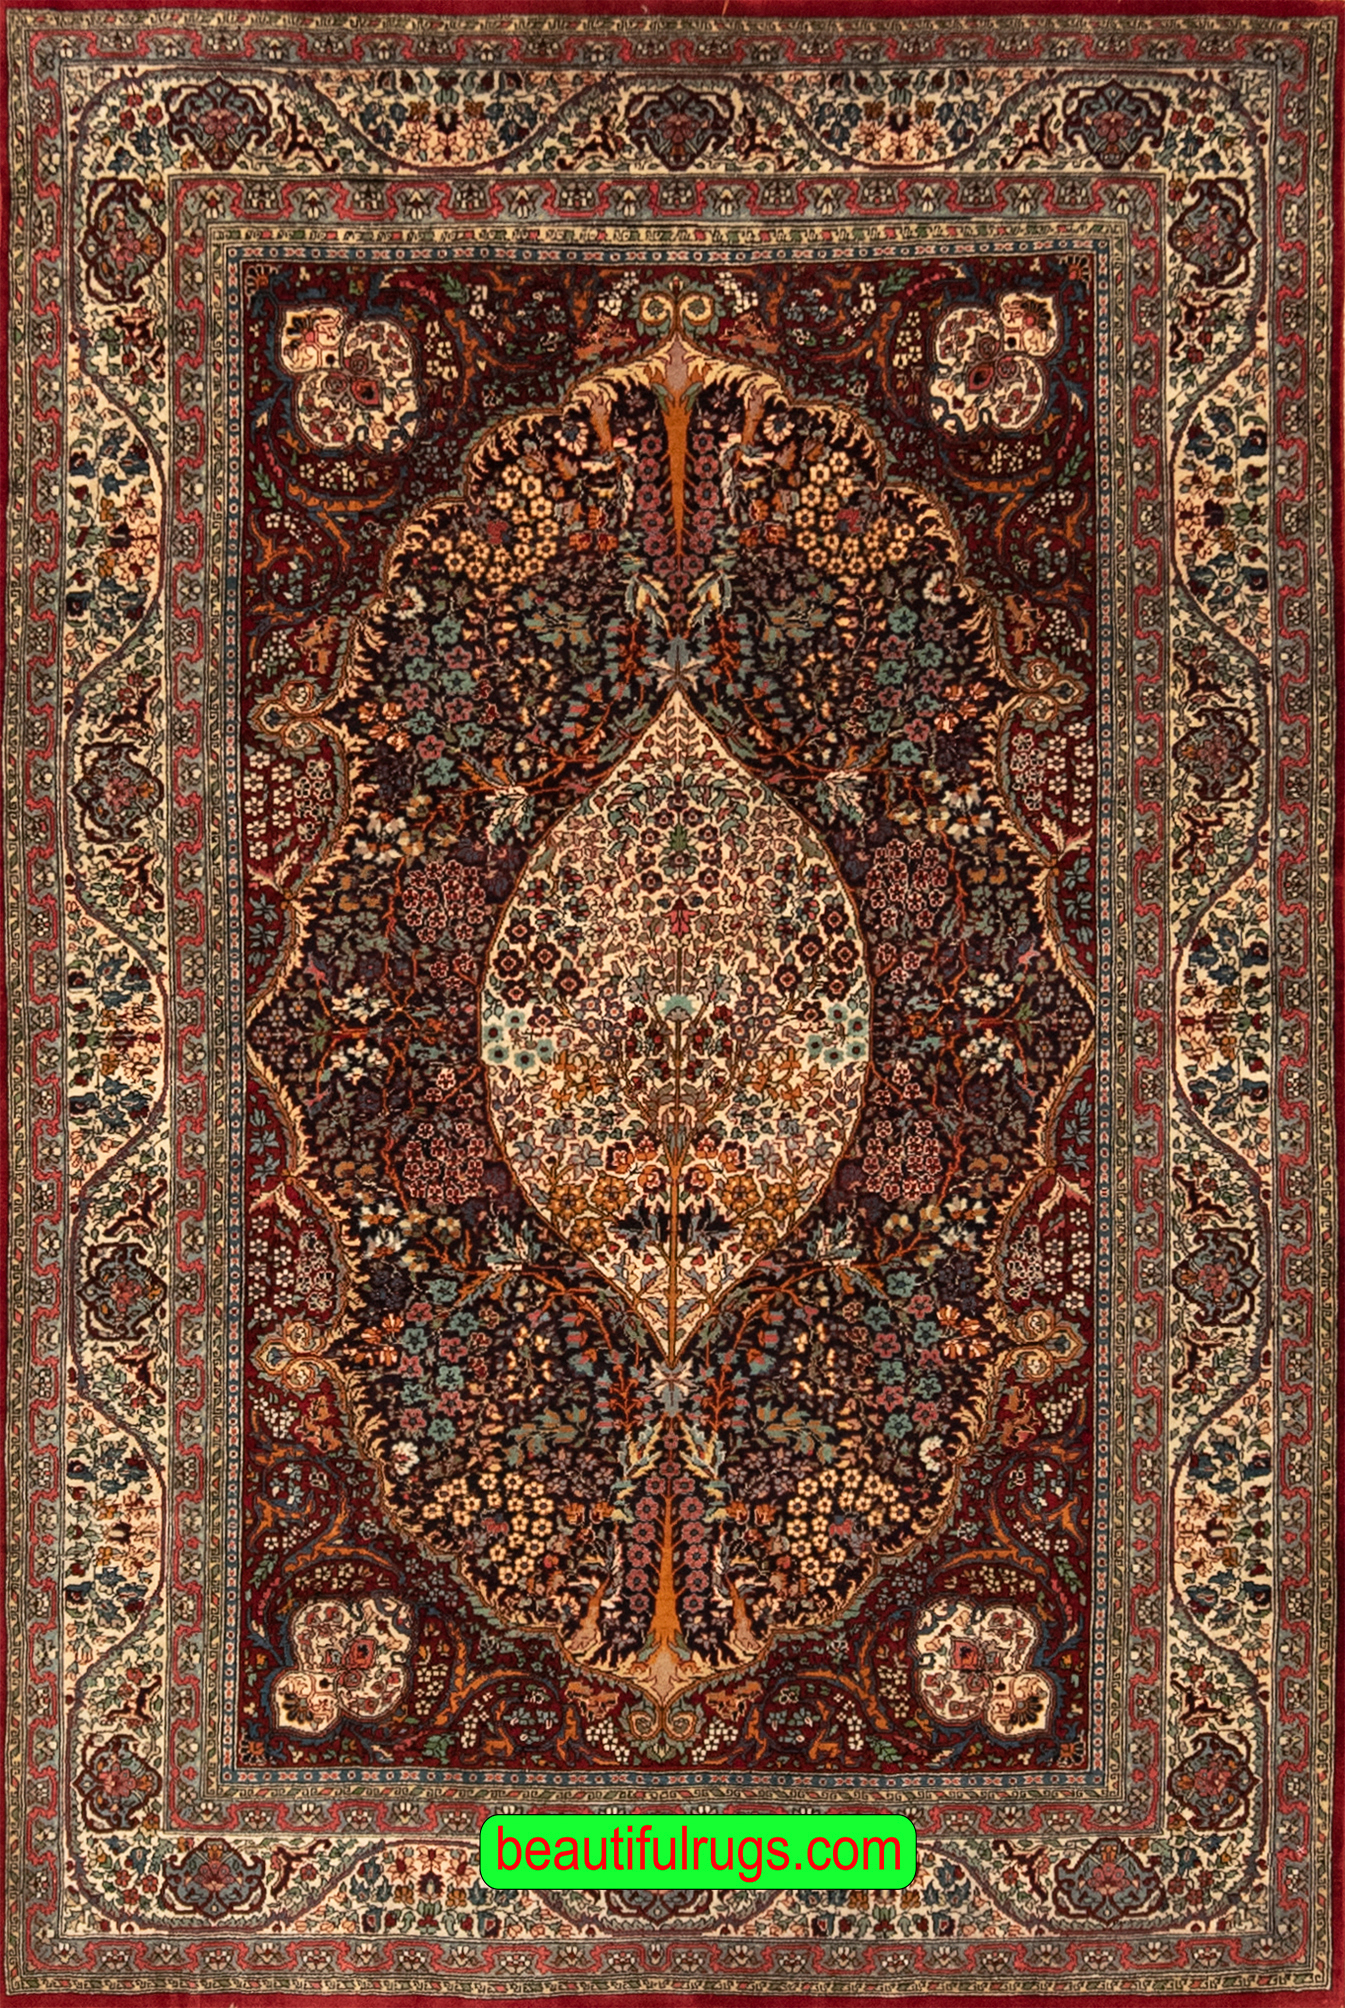 Vintage Handmade Persian Semnan Rug, Vegetable Dyed Persian Rug, size 5x6.1, main image